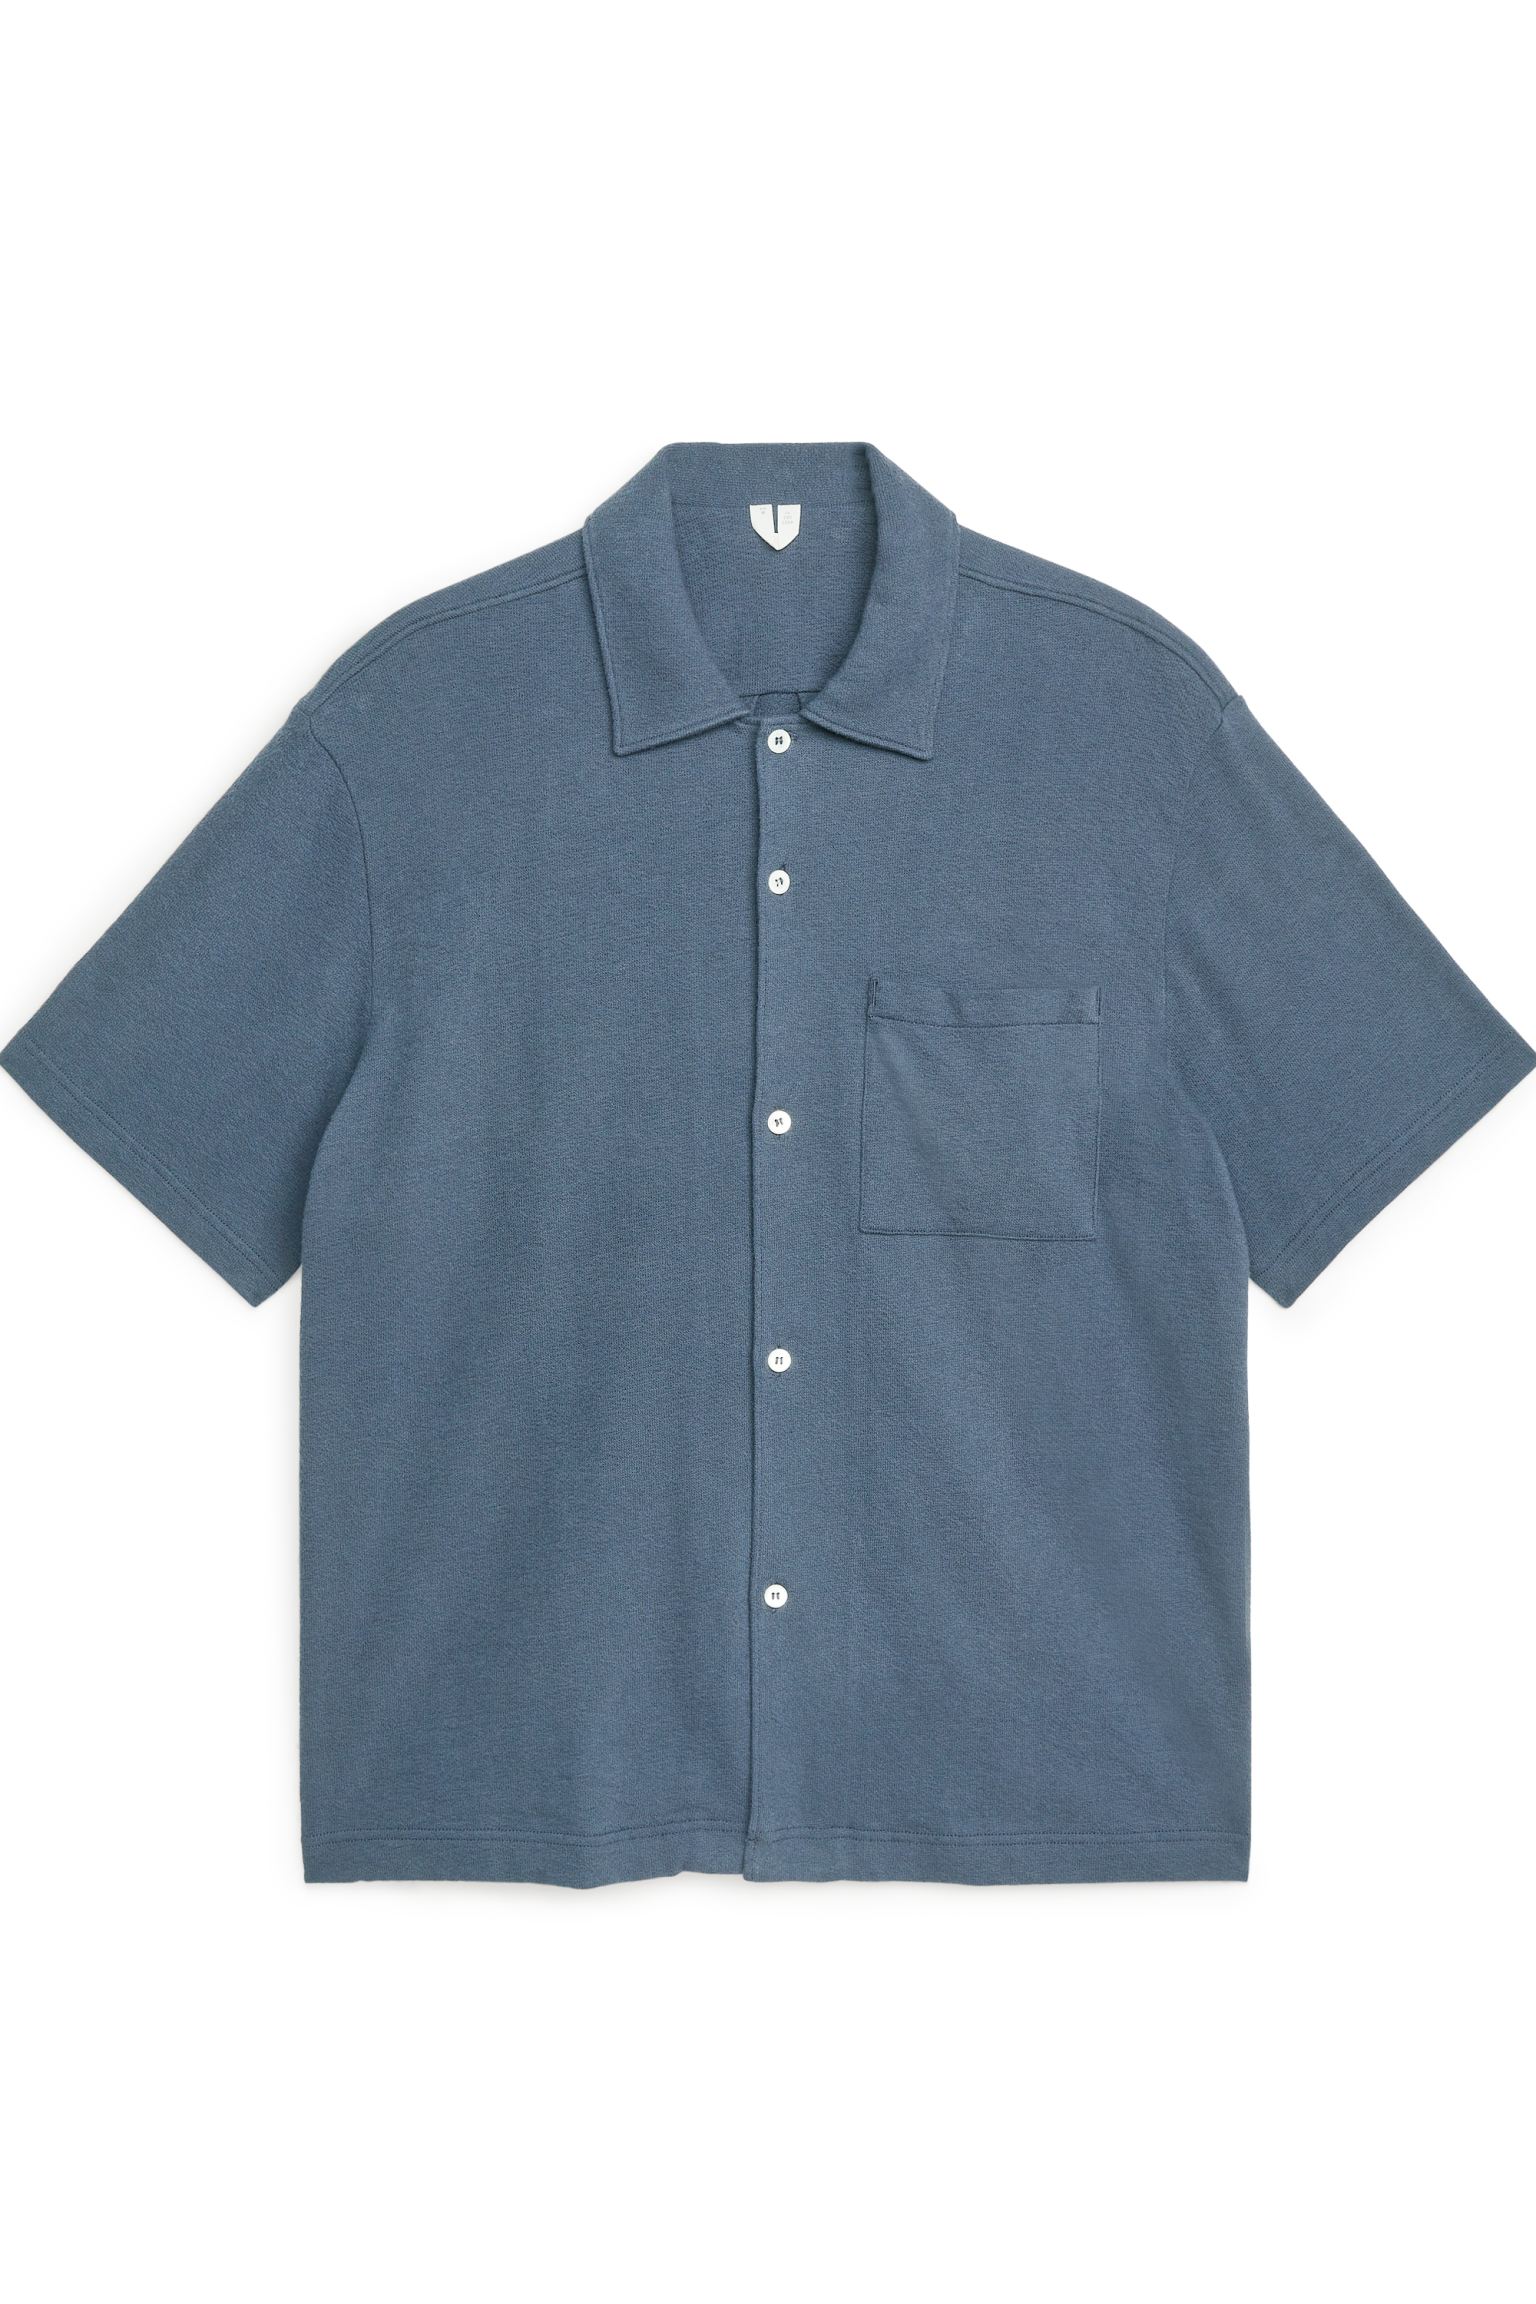 Рубашка мужская ARKET 989229008 синяя S (доставка из-за рубежа)